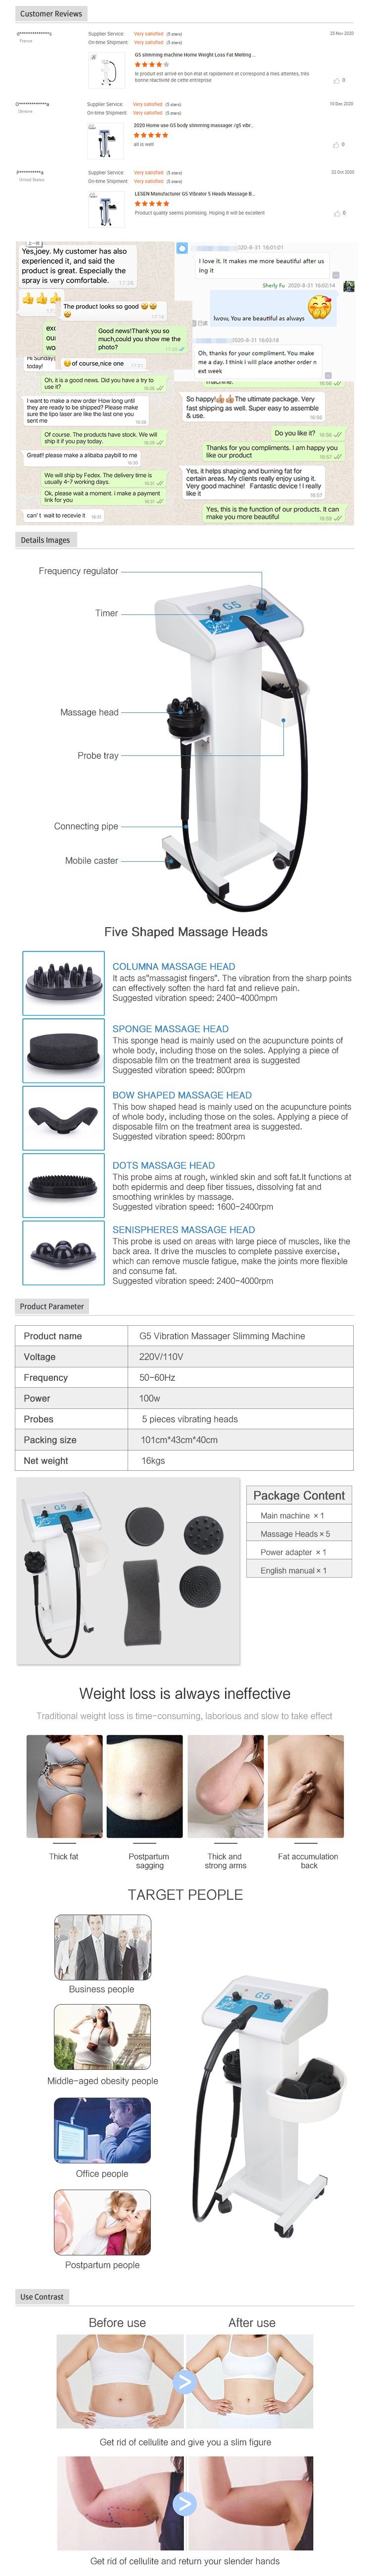 Lesen Manufacturer G5 Vibrator 5 Heads Massage Body Slimming Massager Machine